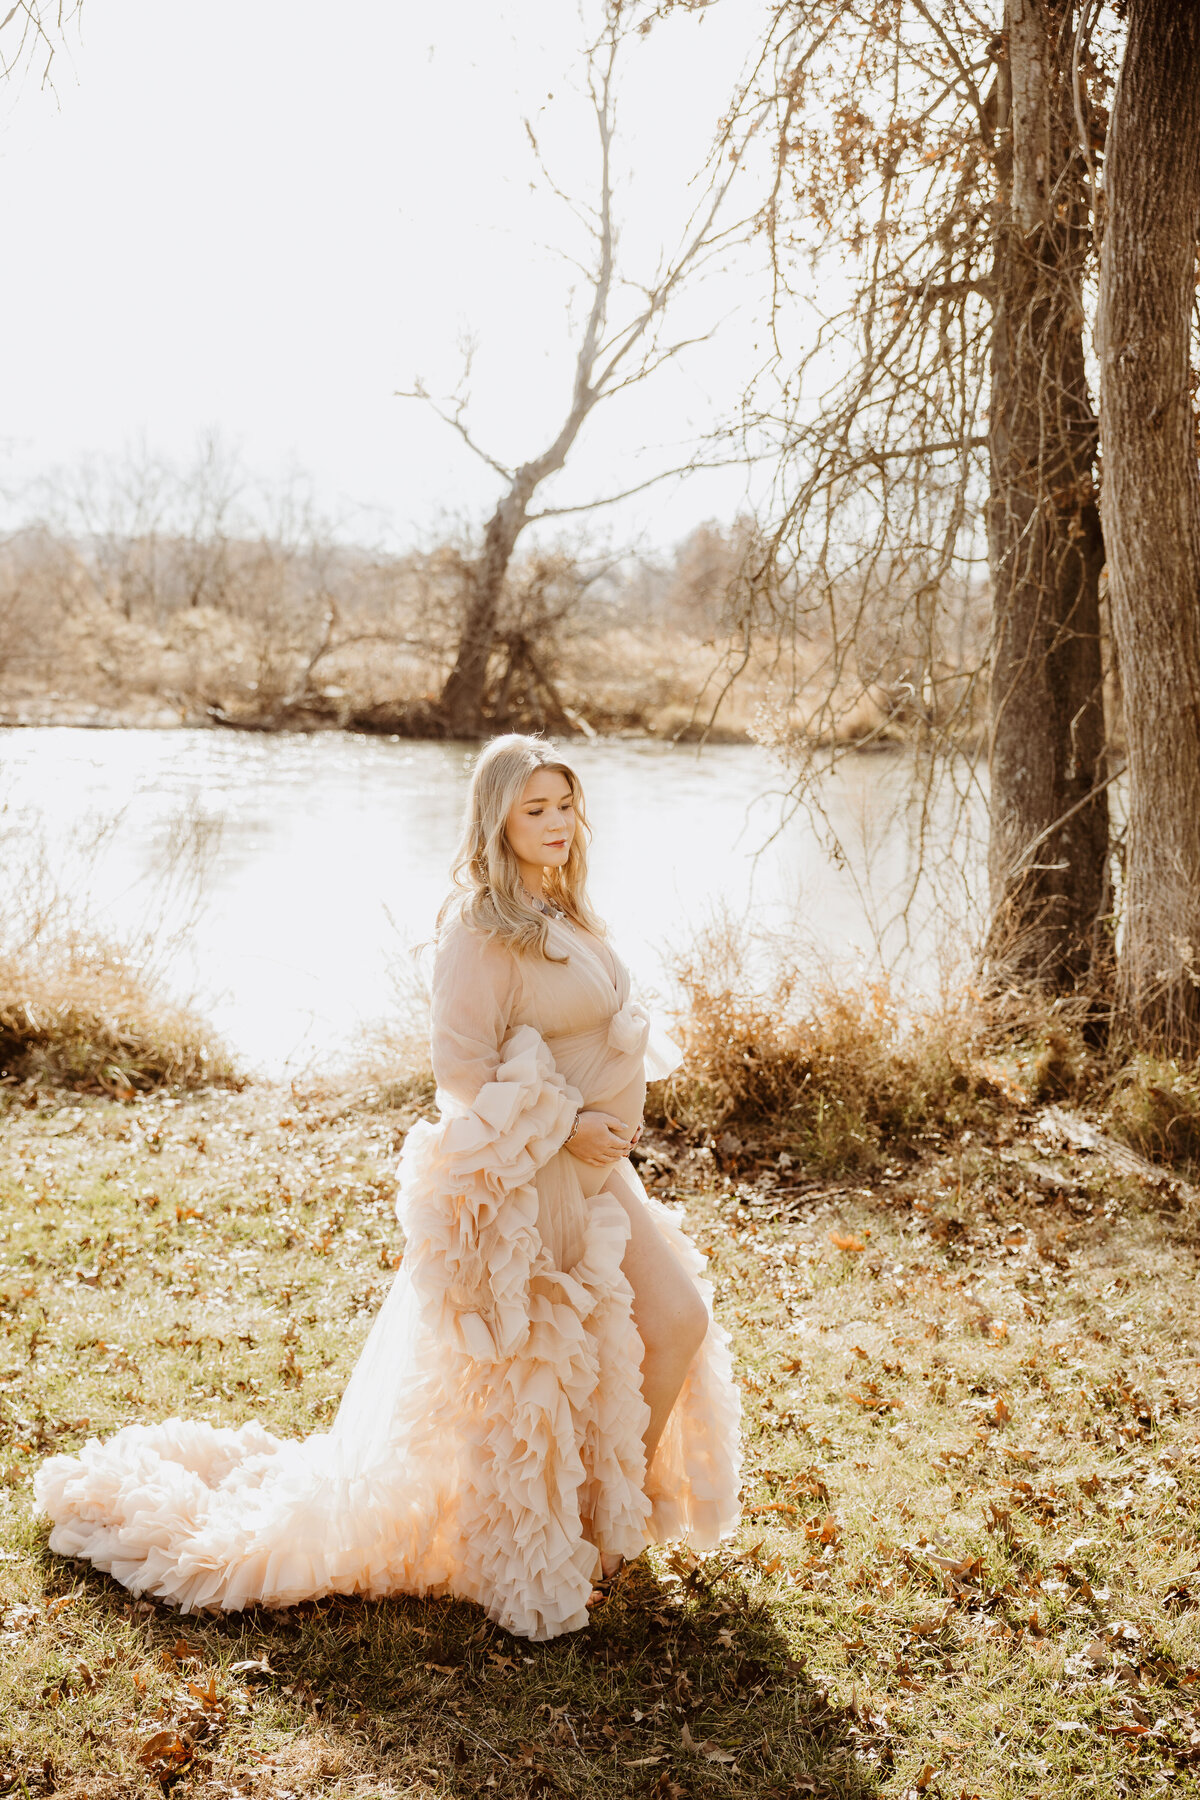 A pregnant woman wears an elegant dress amidst the warm fall woods.